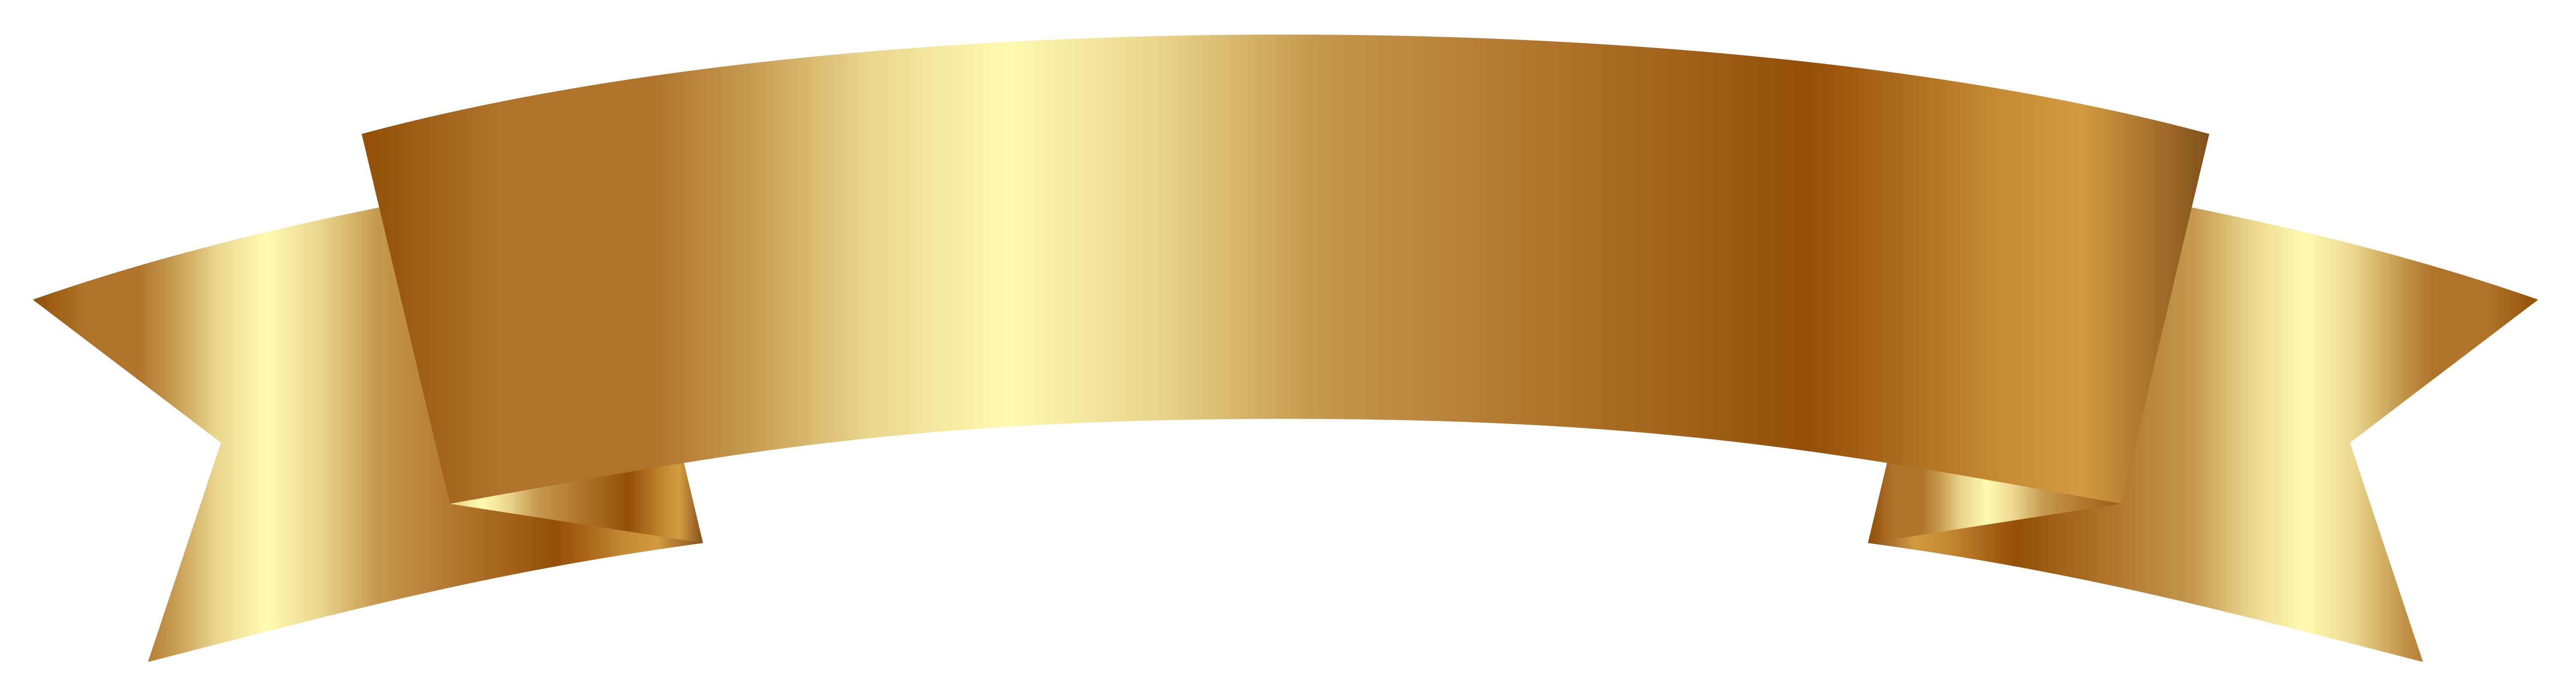 Gambar Transparan banner emas